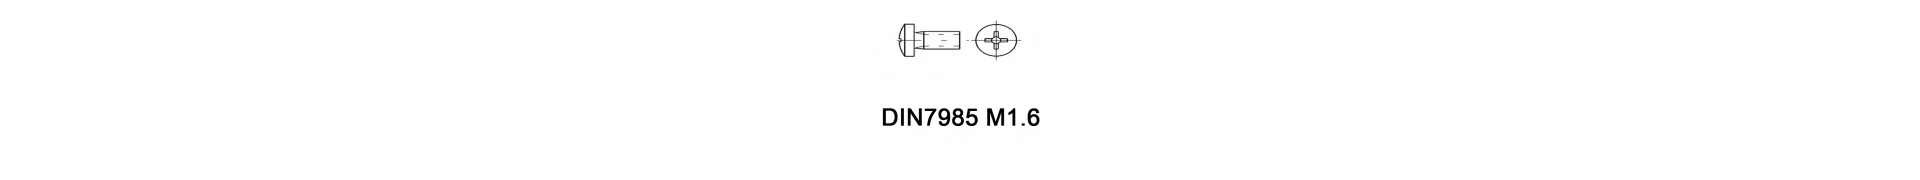 DIN7985 M1.6